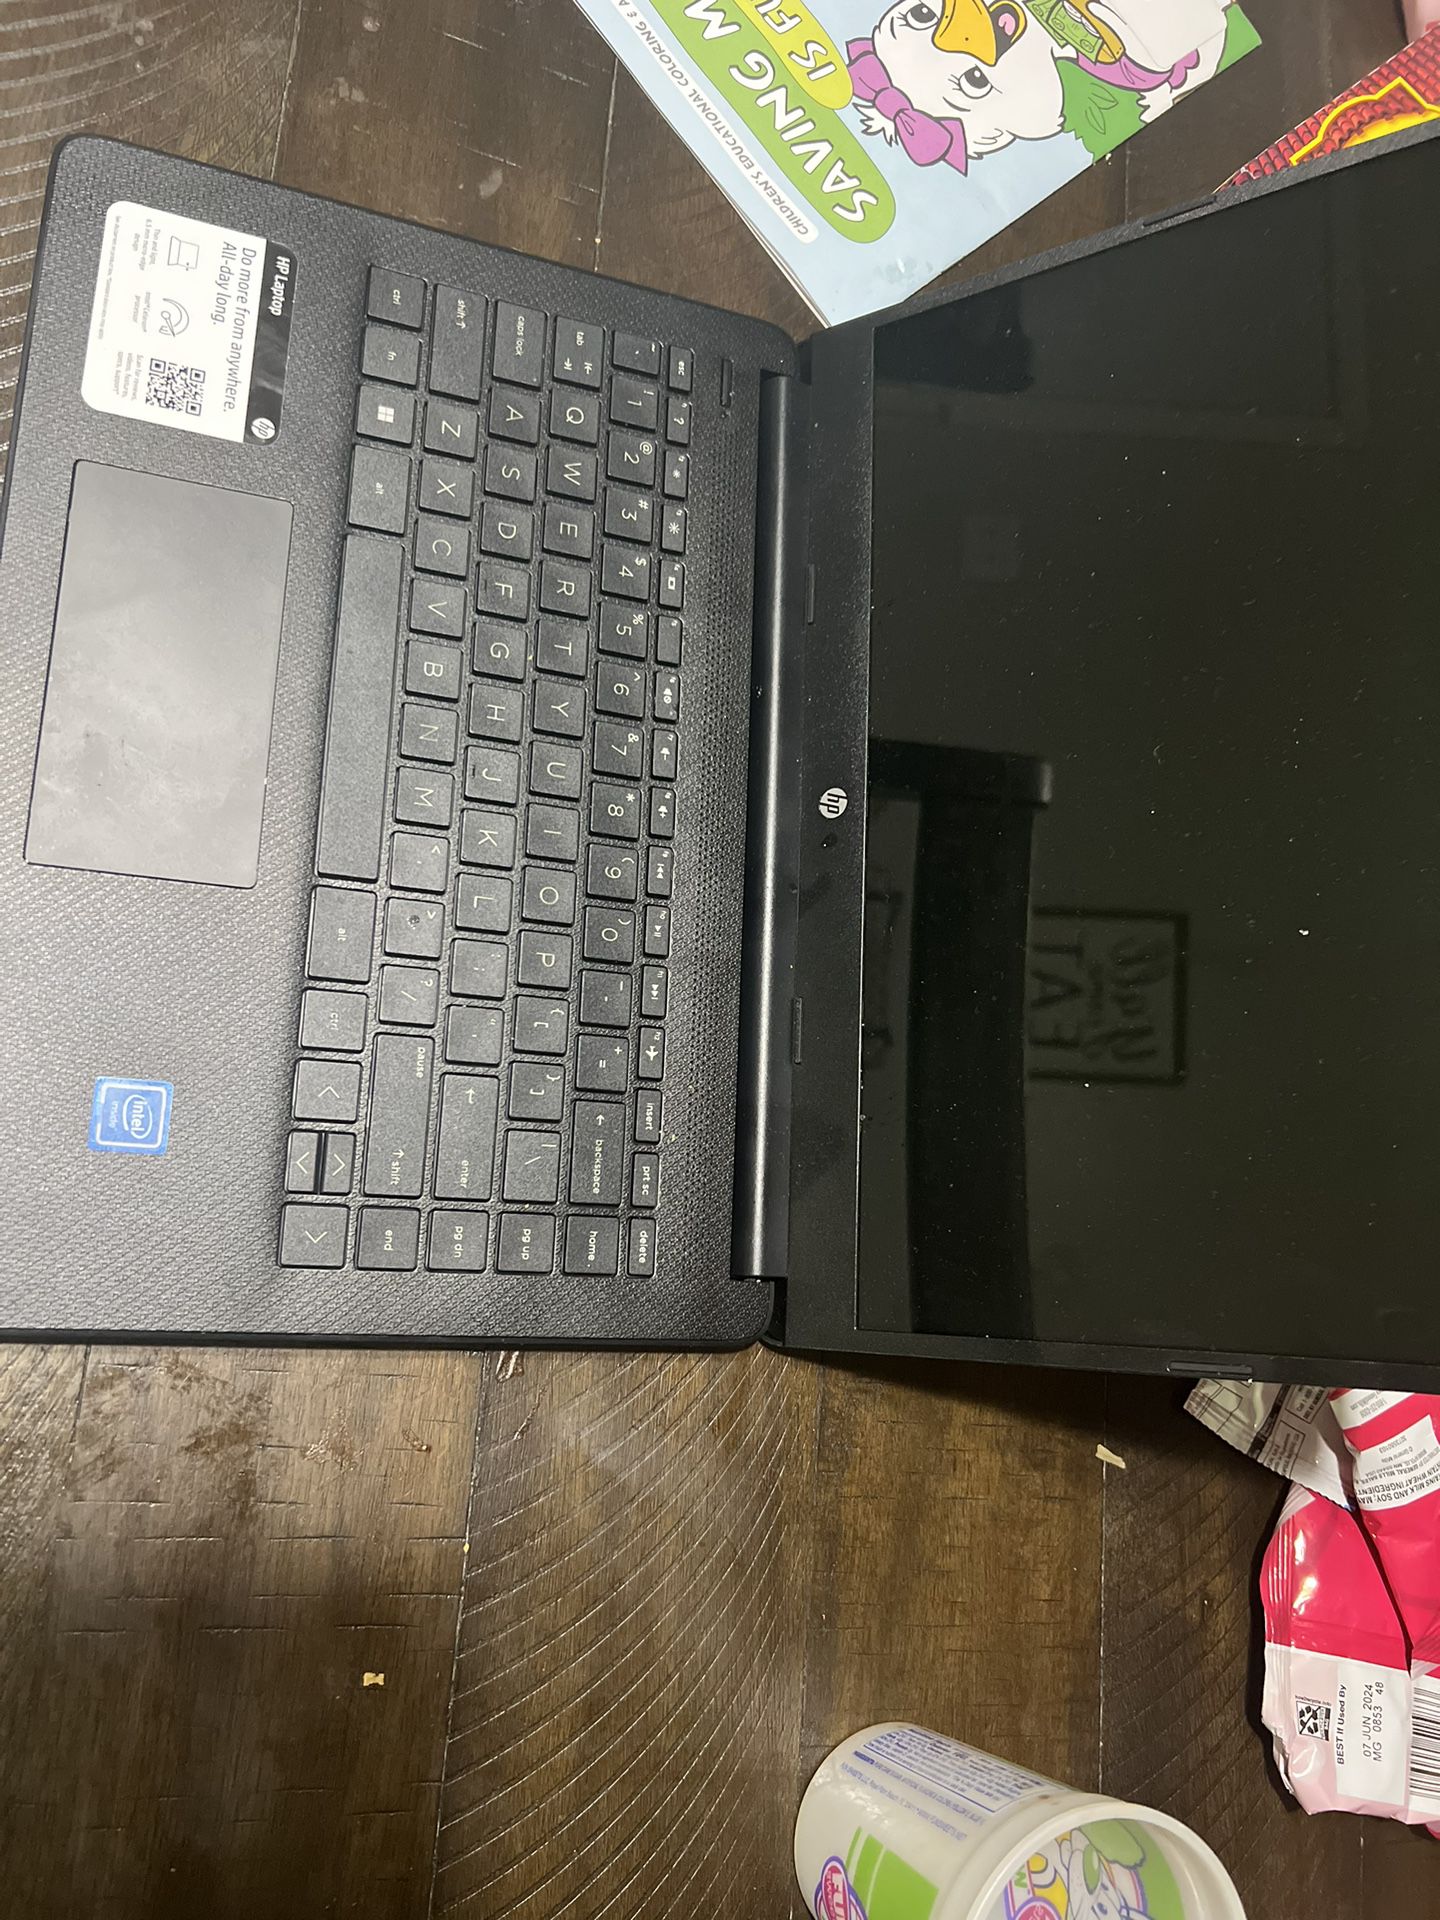 HP Laptop